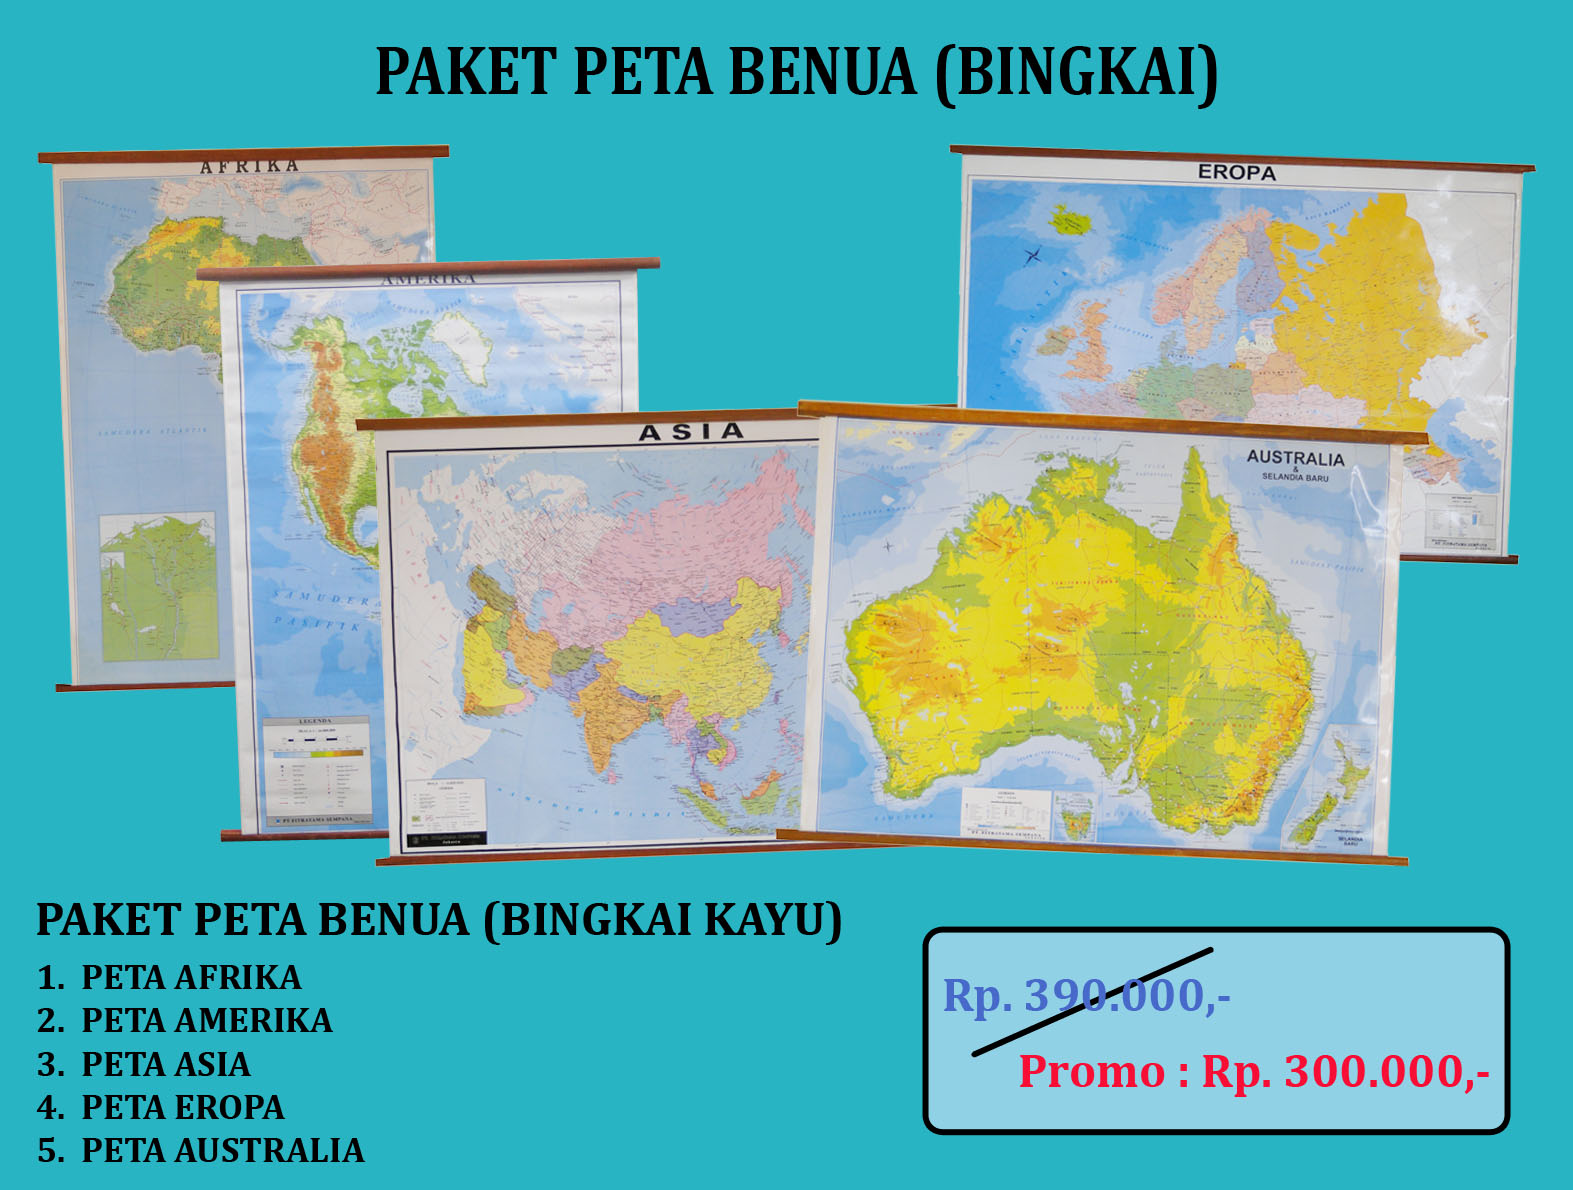 Jual Peta Indonesia Dunia Murah Lengkap Paket Benua Bingkai Terdiri